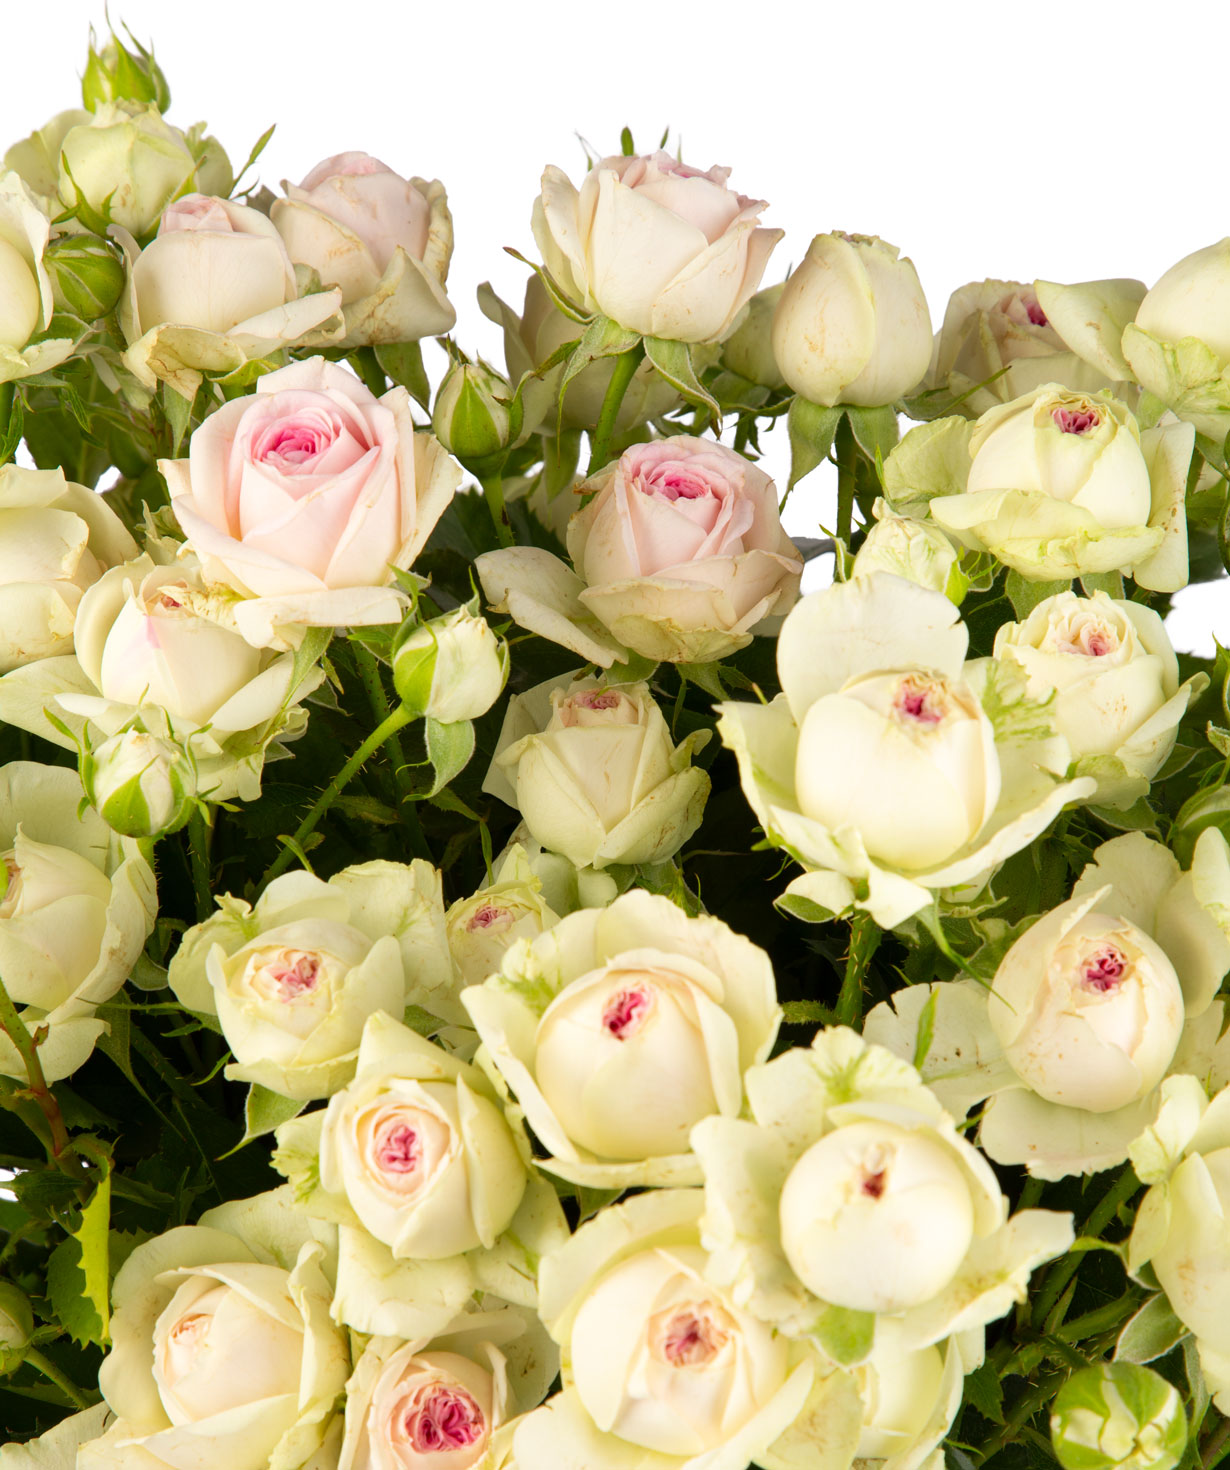 Composition `Prada` with bush roses